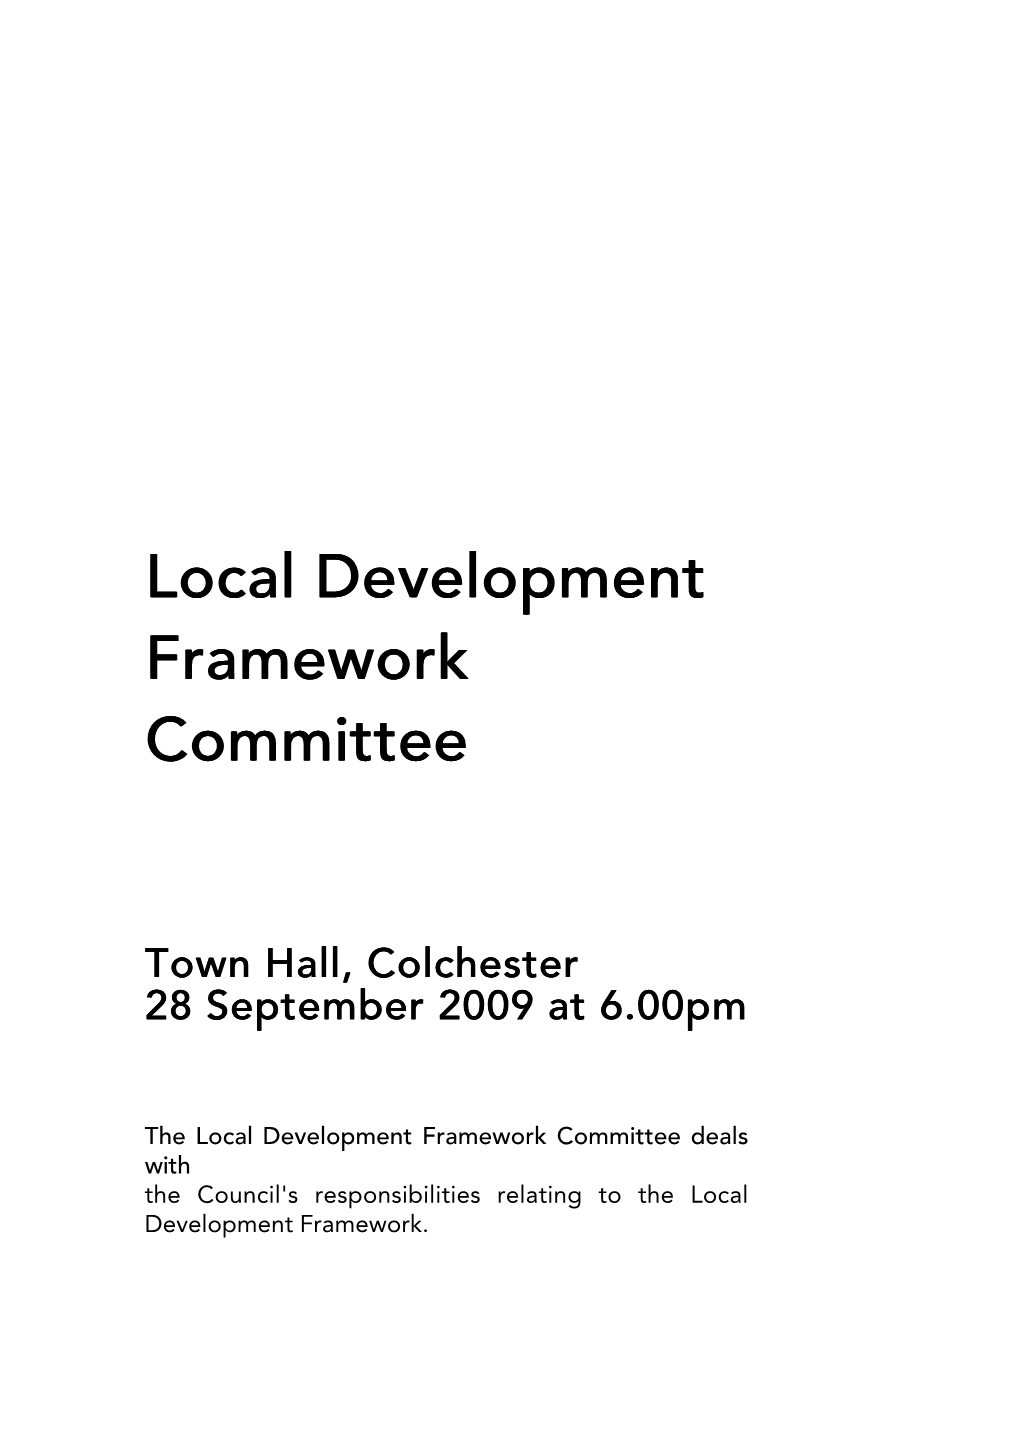 Local Development Framework Committee Committee